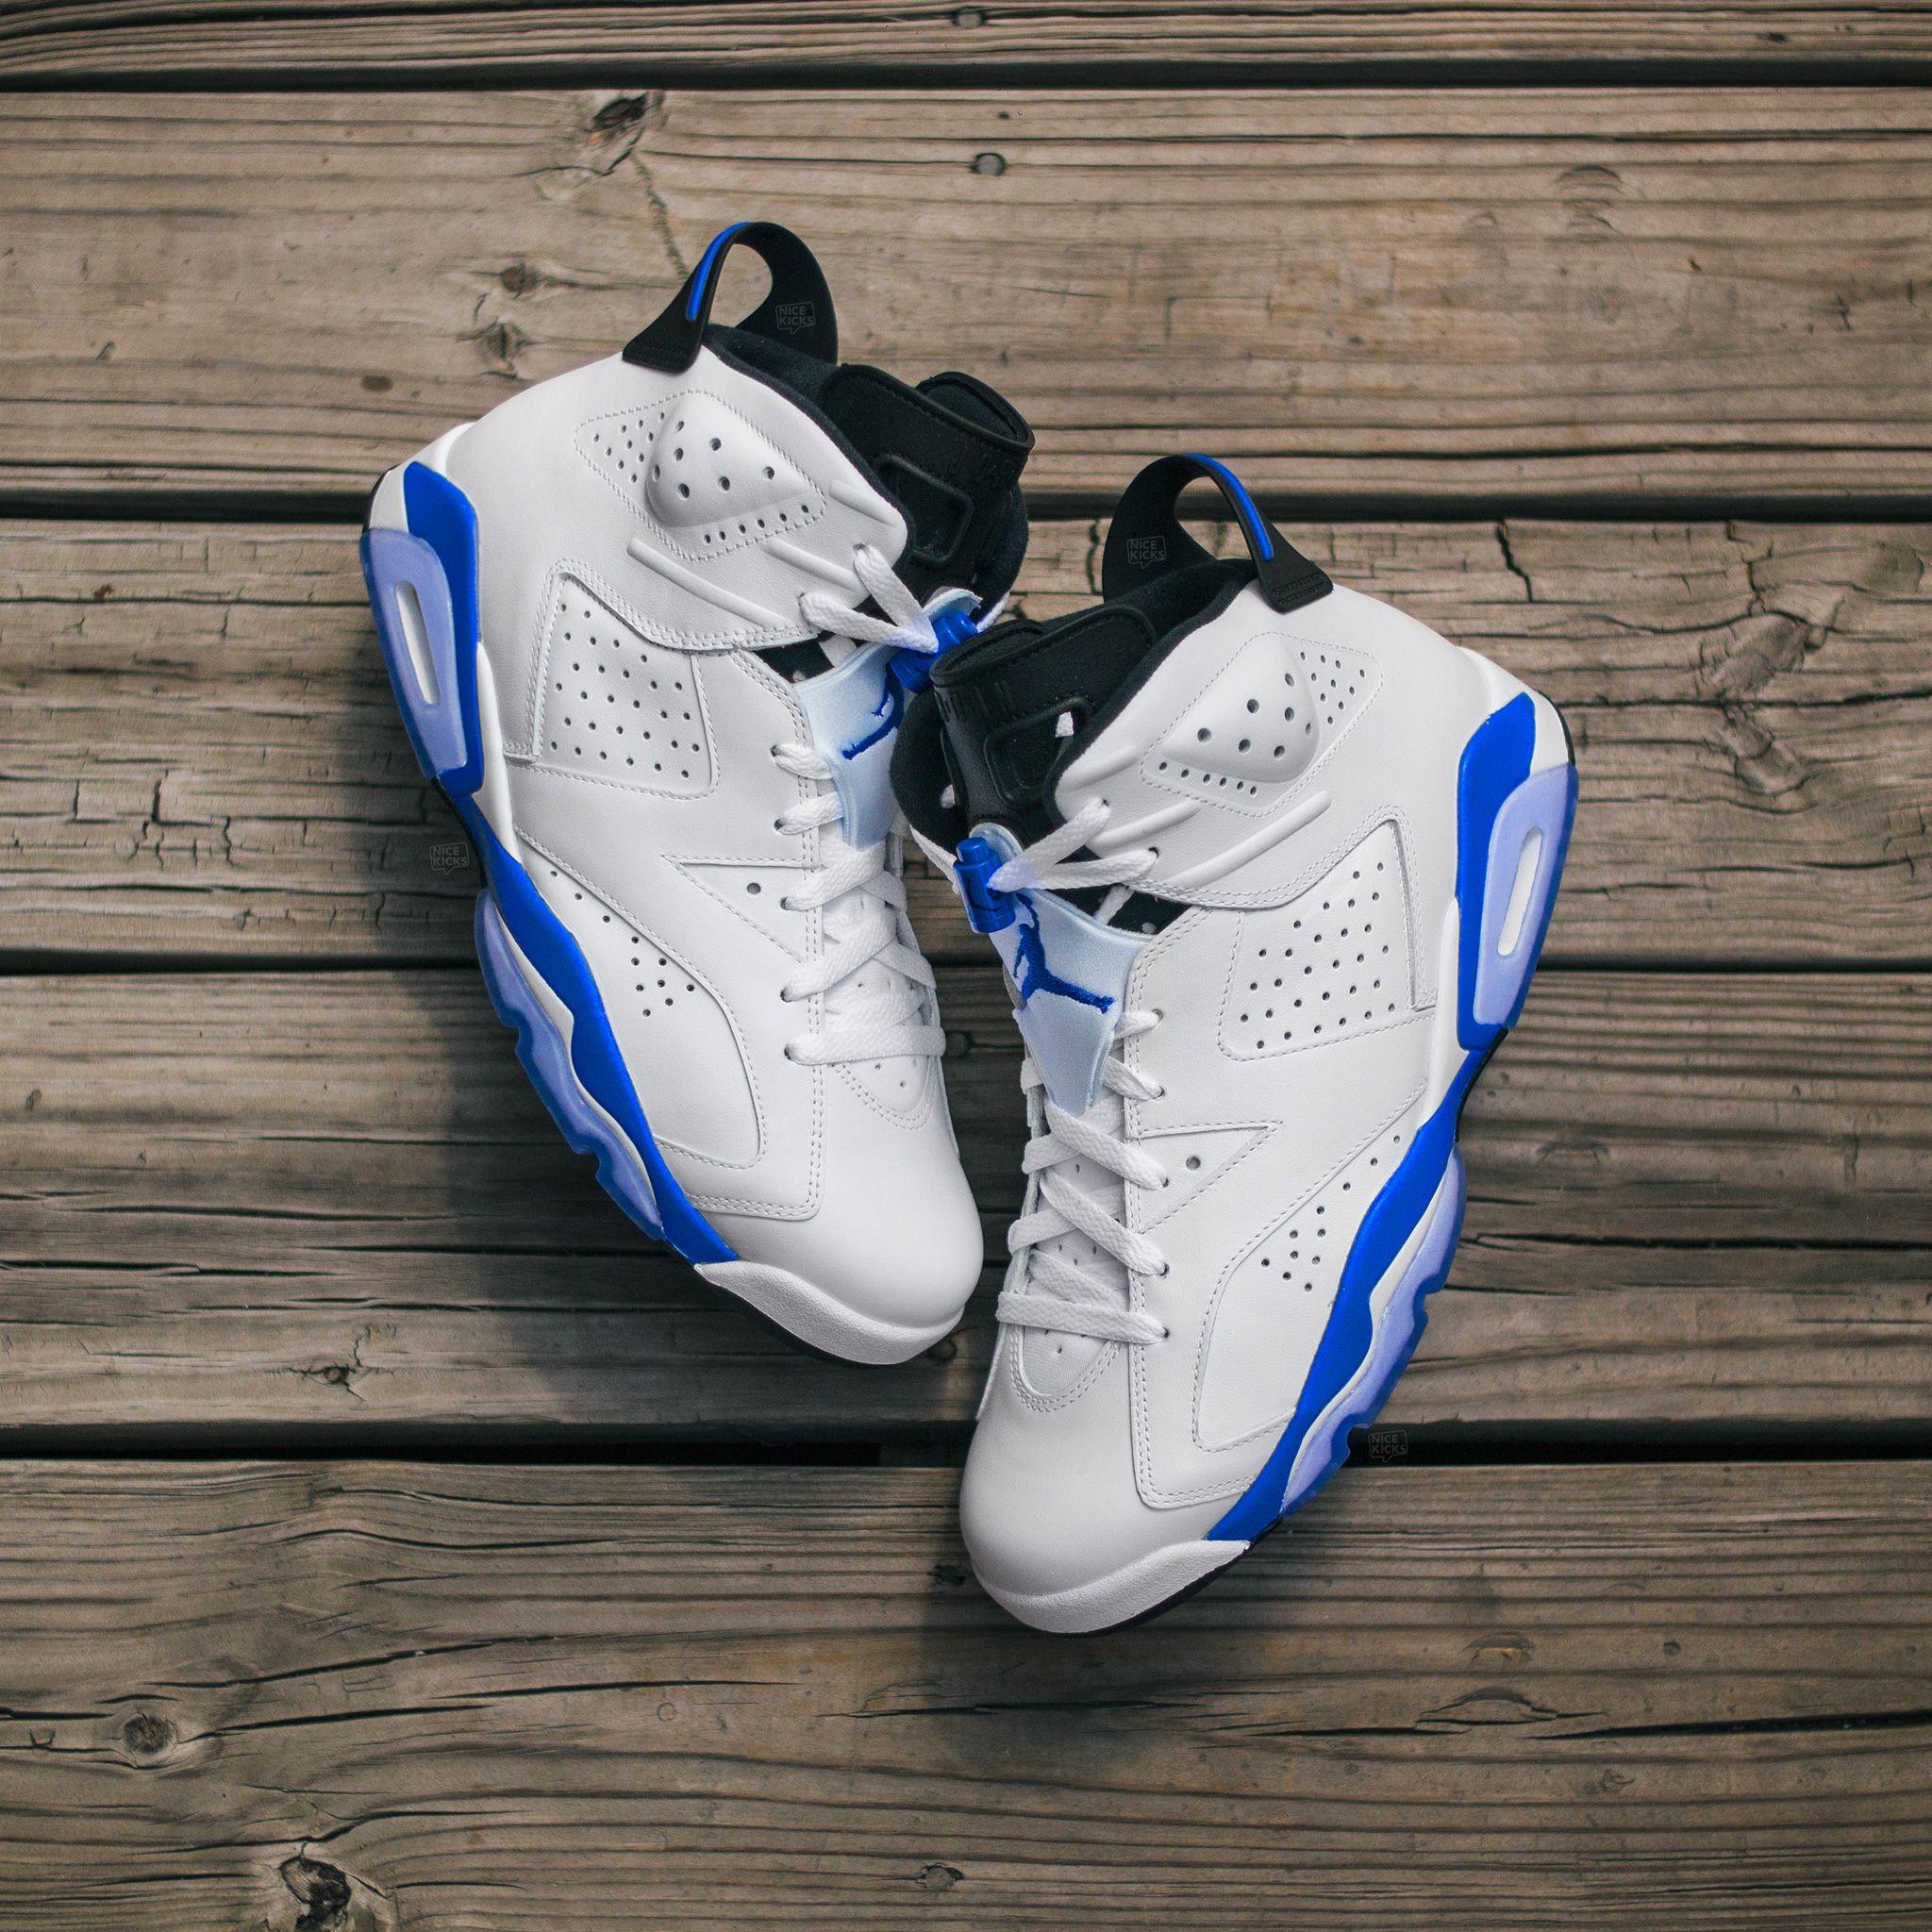 A pair of white and blue Air Jordan 6 sneakers on a wooden floor - Air Jordan 6